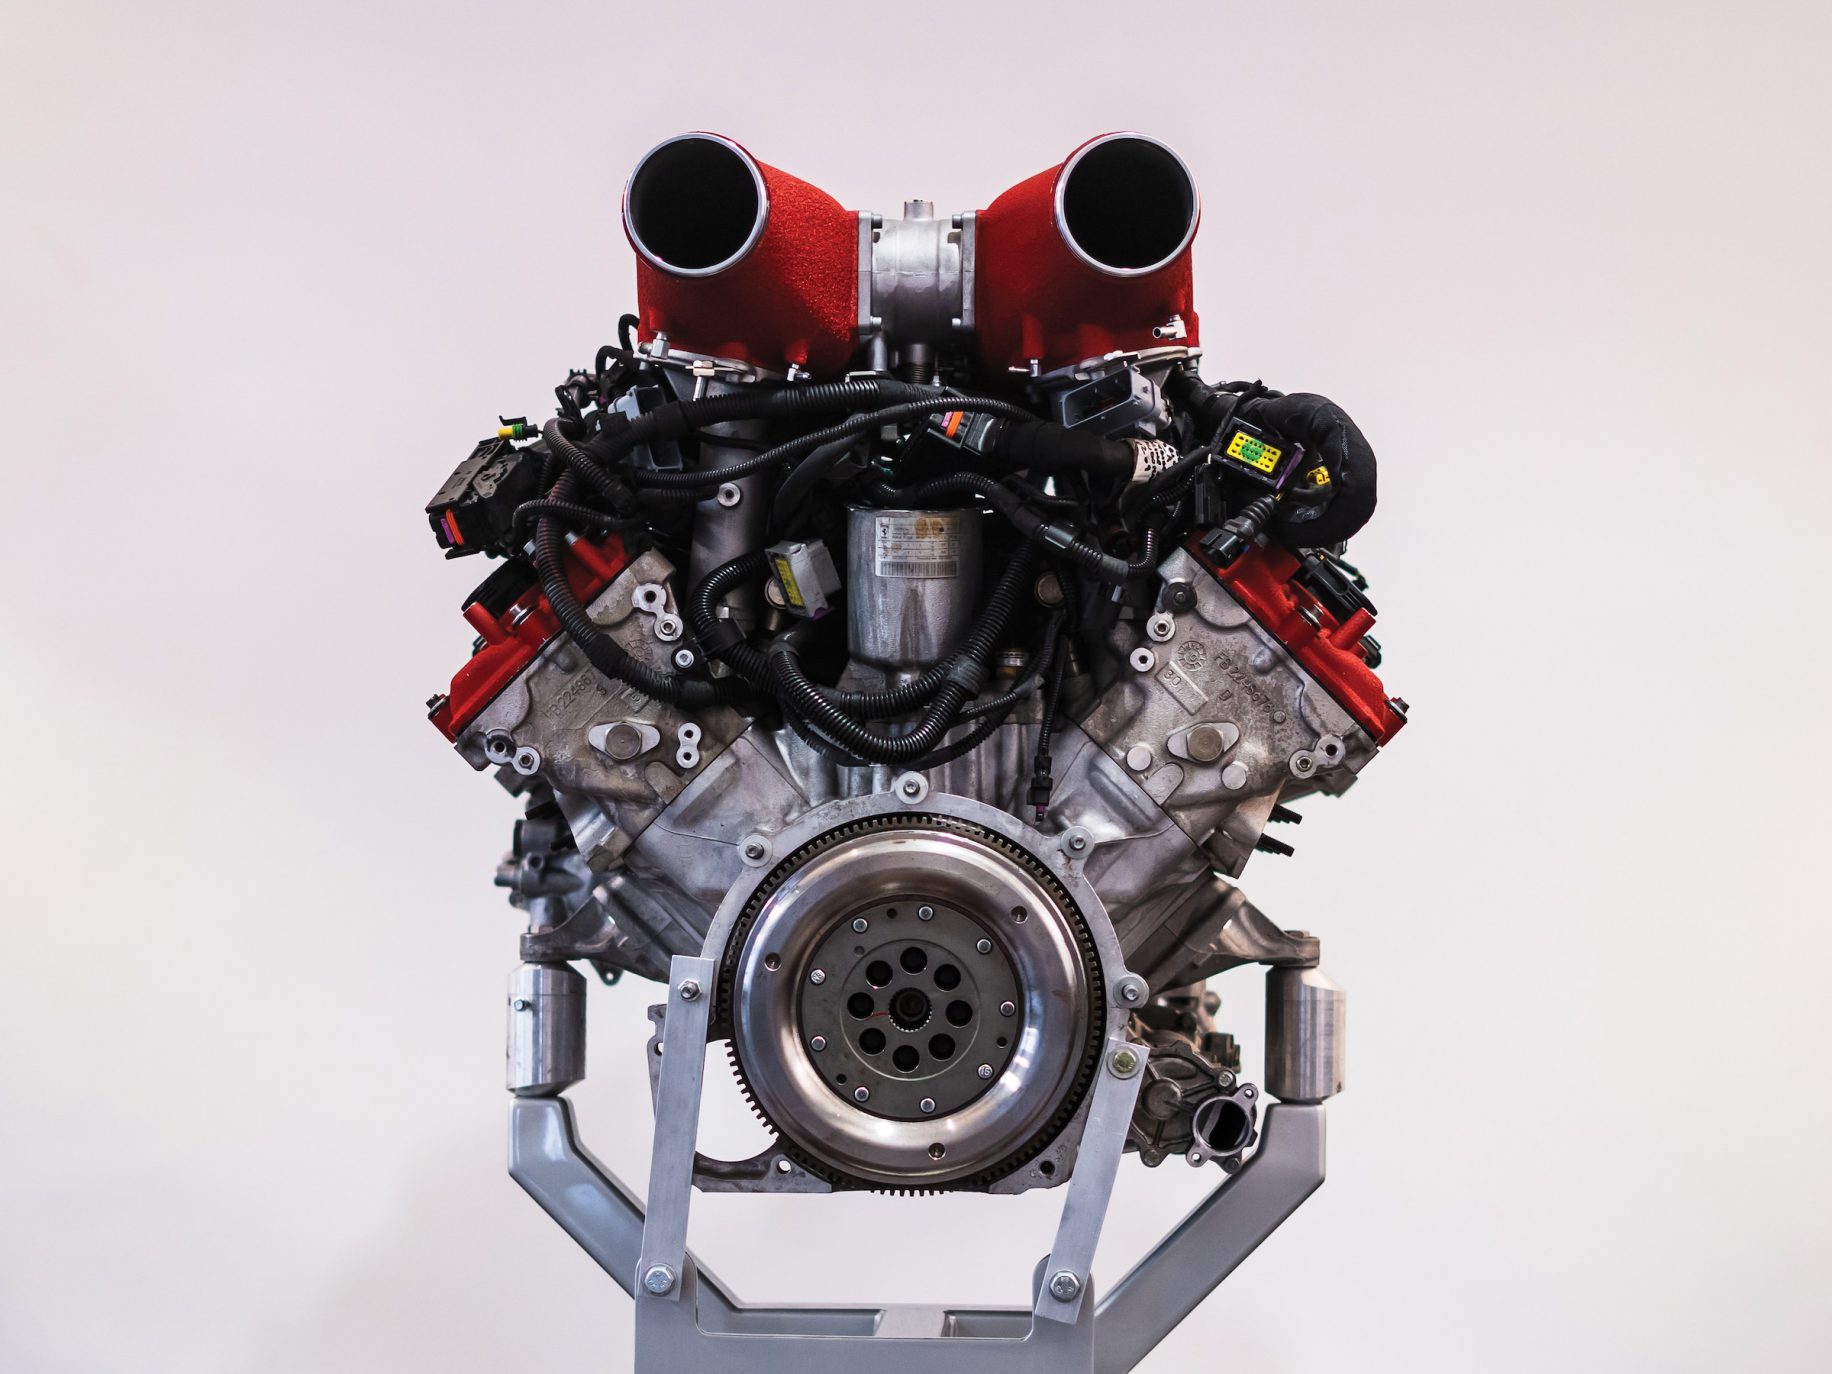 Crate Engine Heaven A Ferrari 458 V8 With 562 BHP